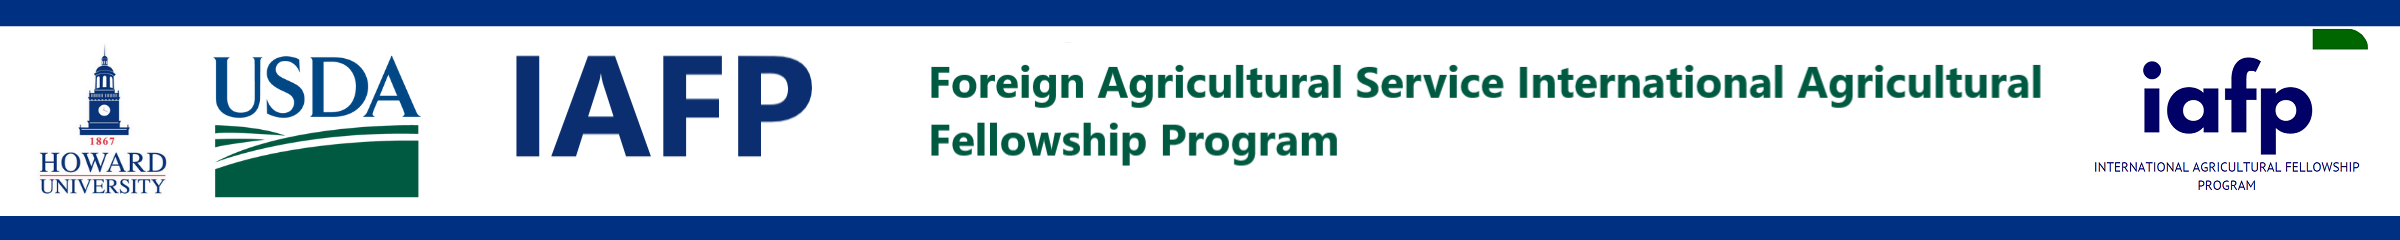 FAS International Agricultural Fellowship Program logo